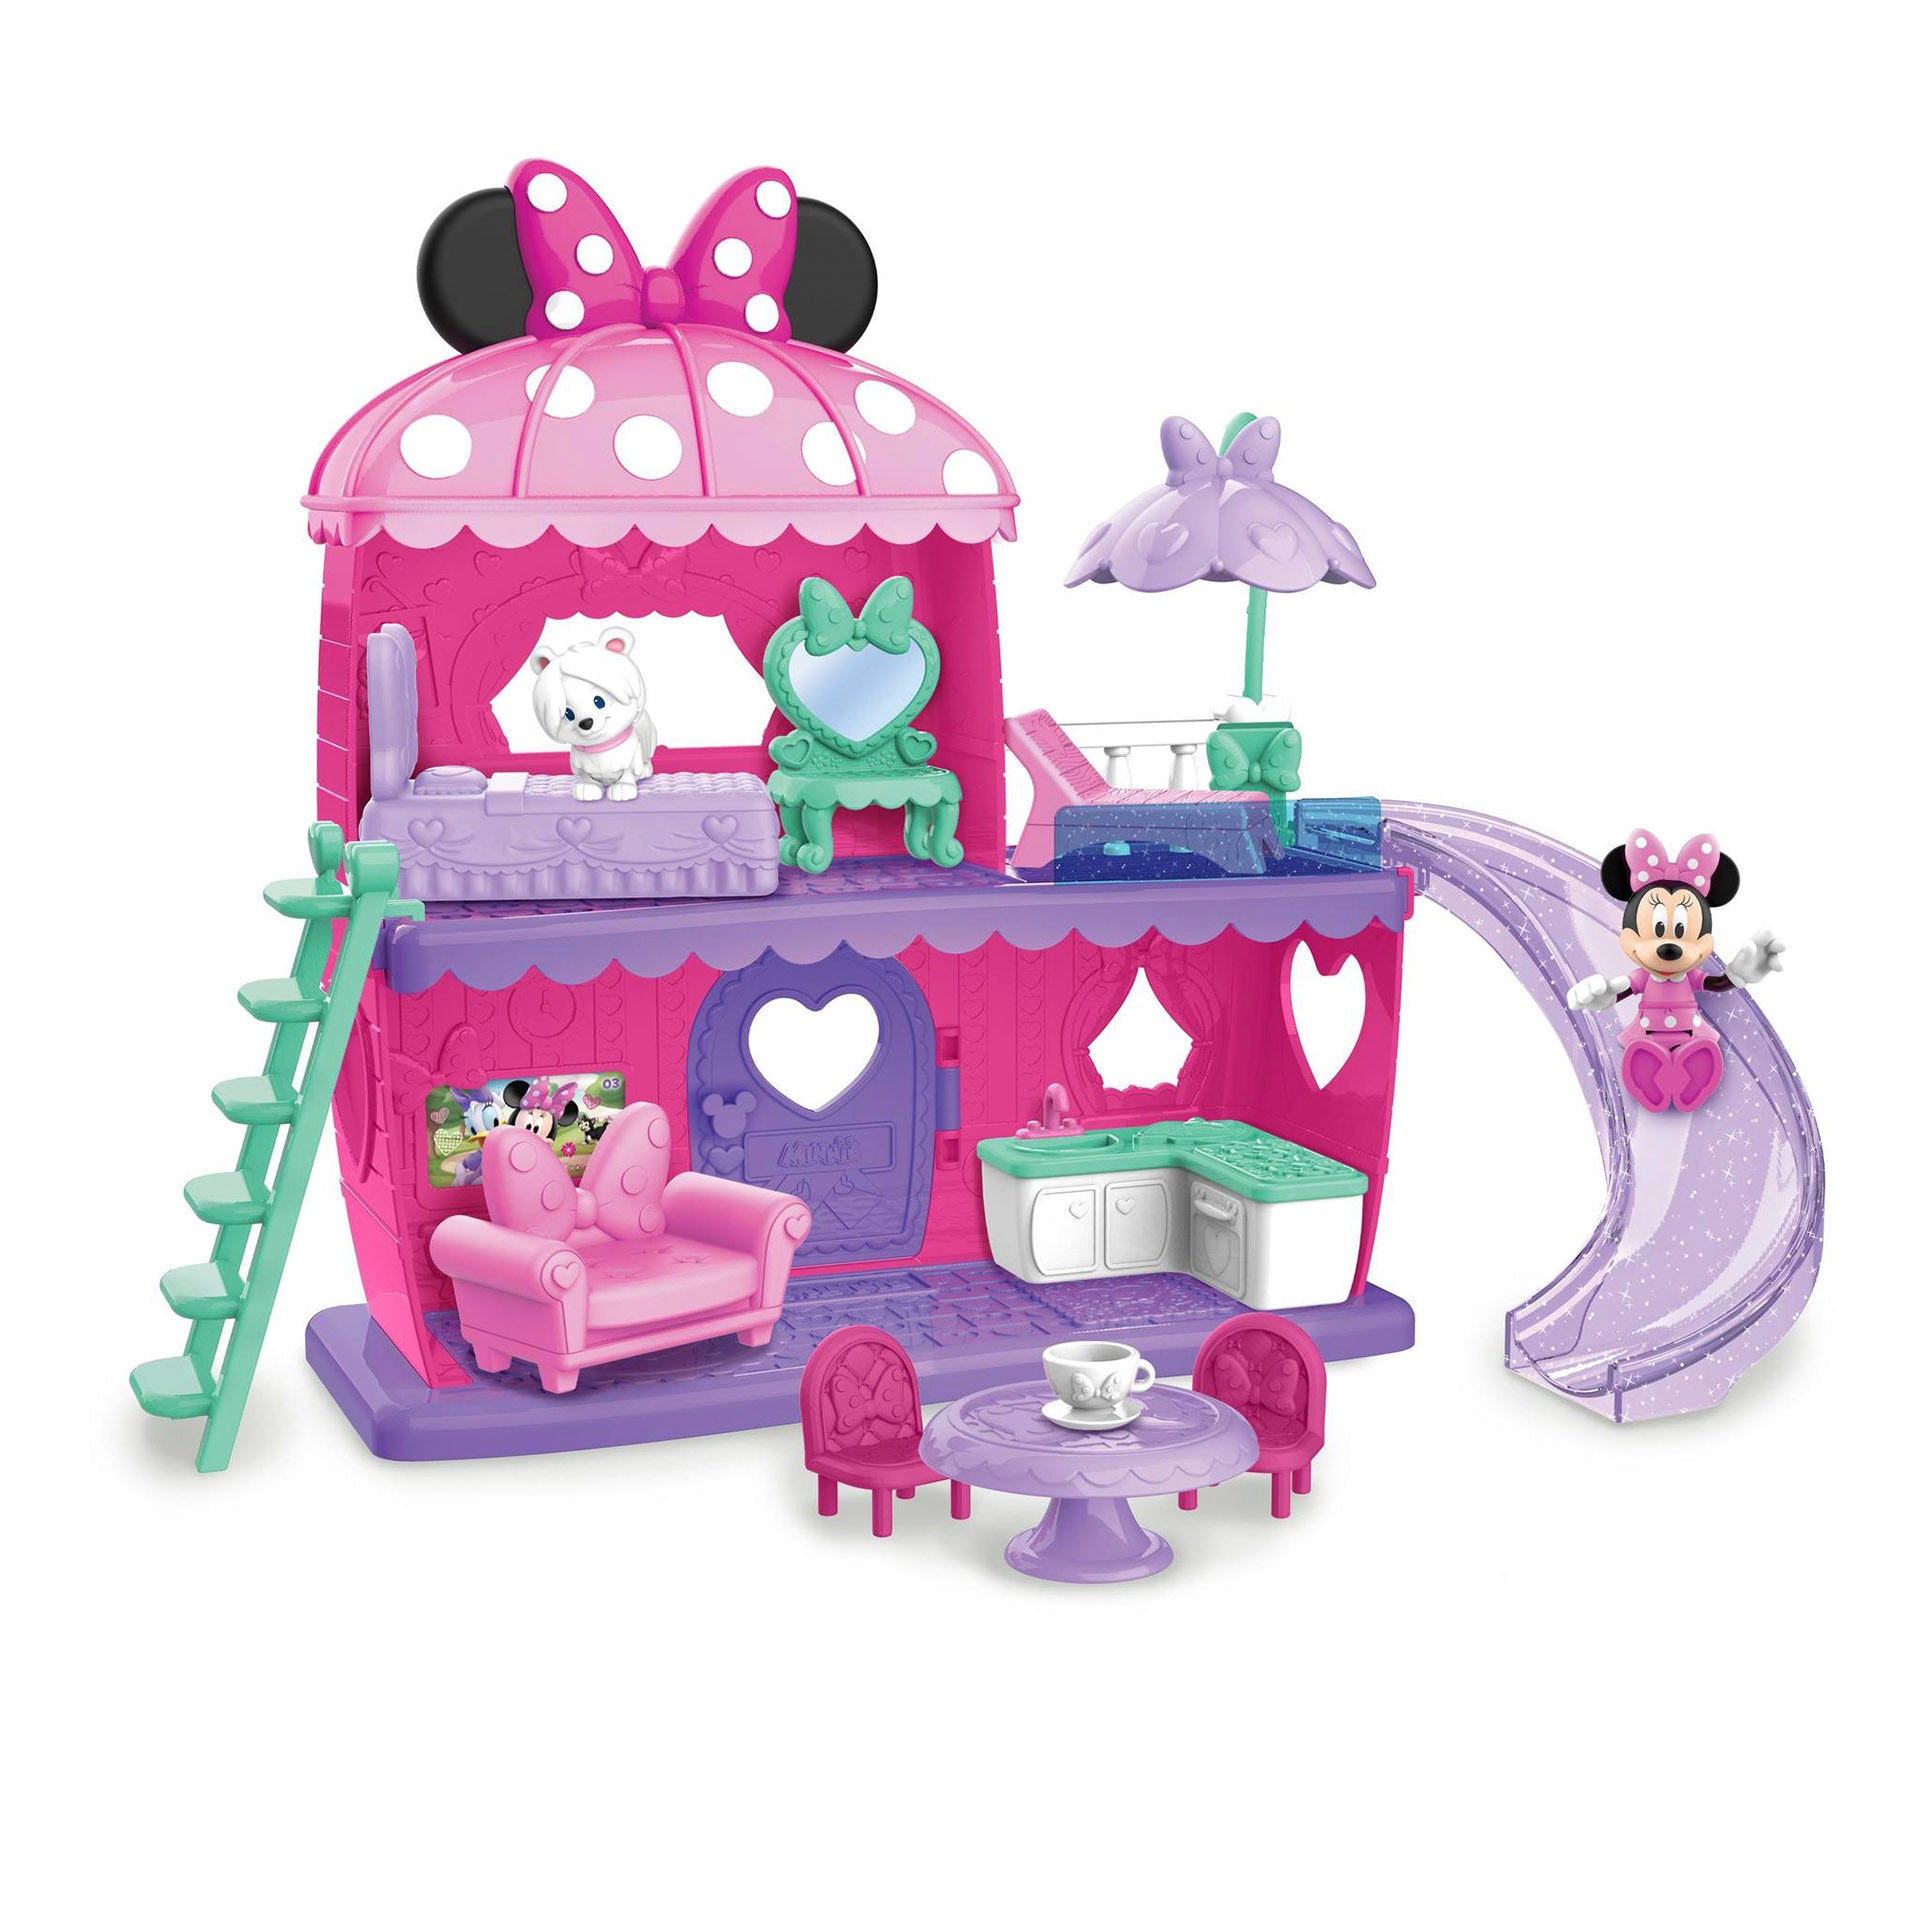 Minnie Playset Casa de Brincar